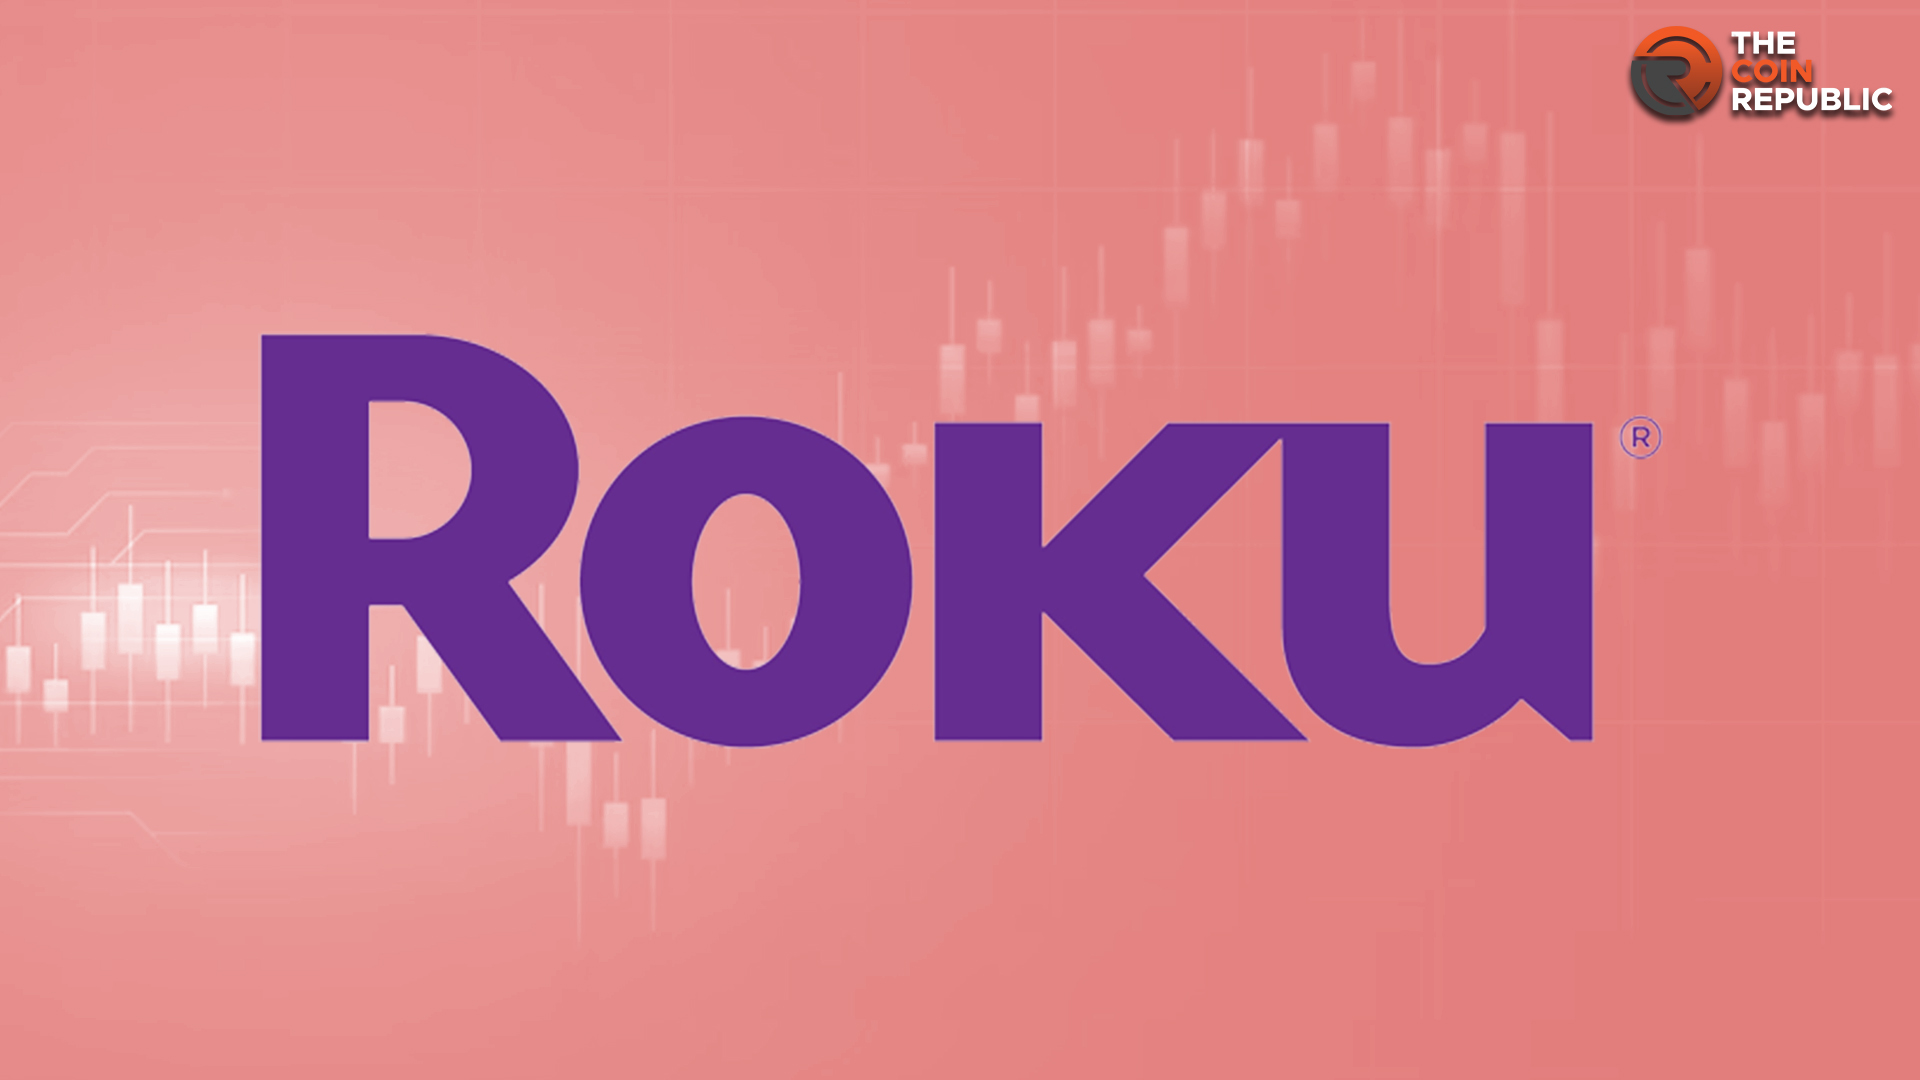 ROKU Stock Price Analysis: Are Buyers Accumulating Again?